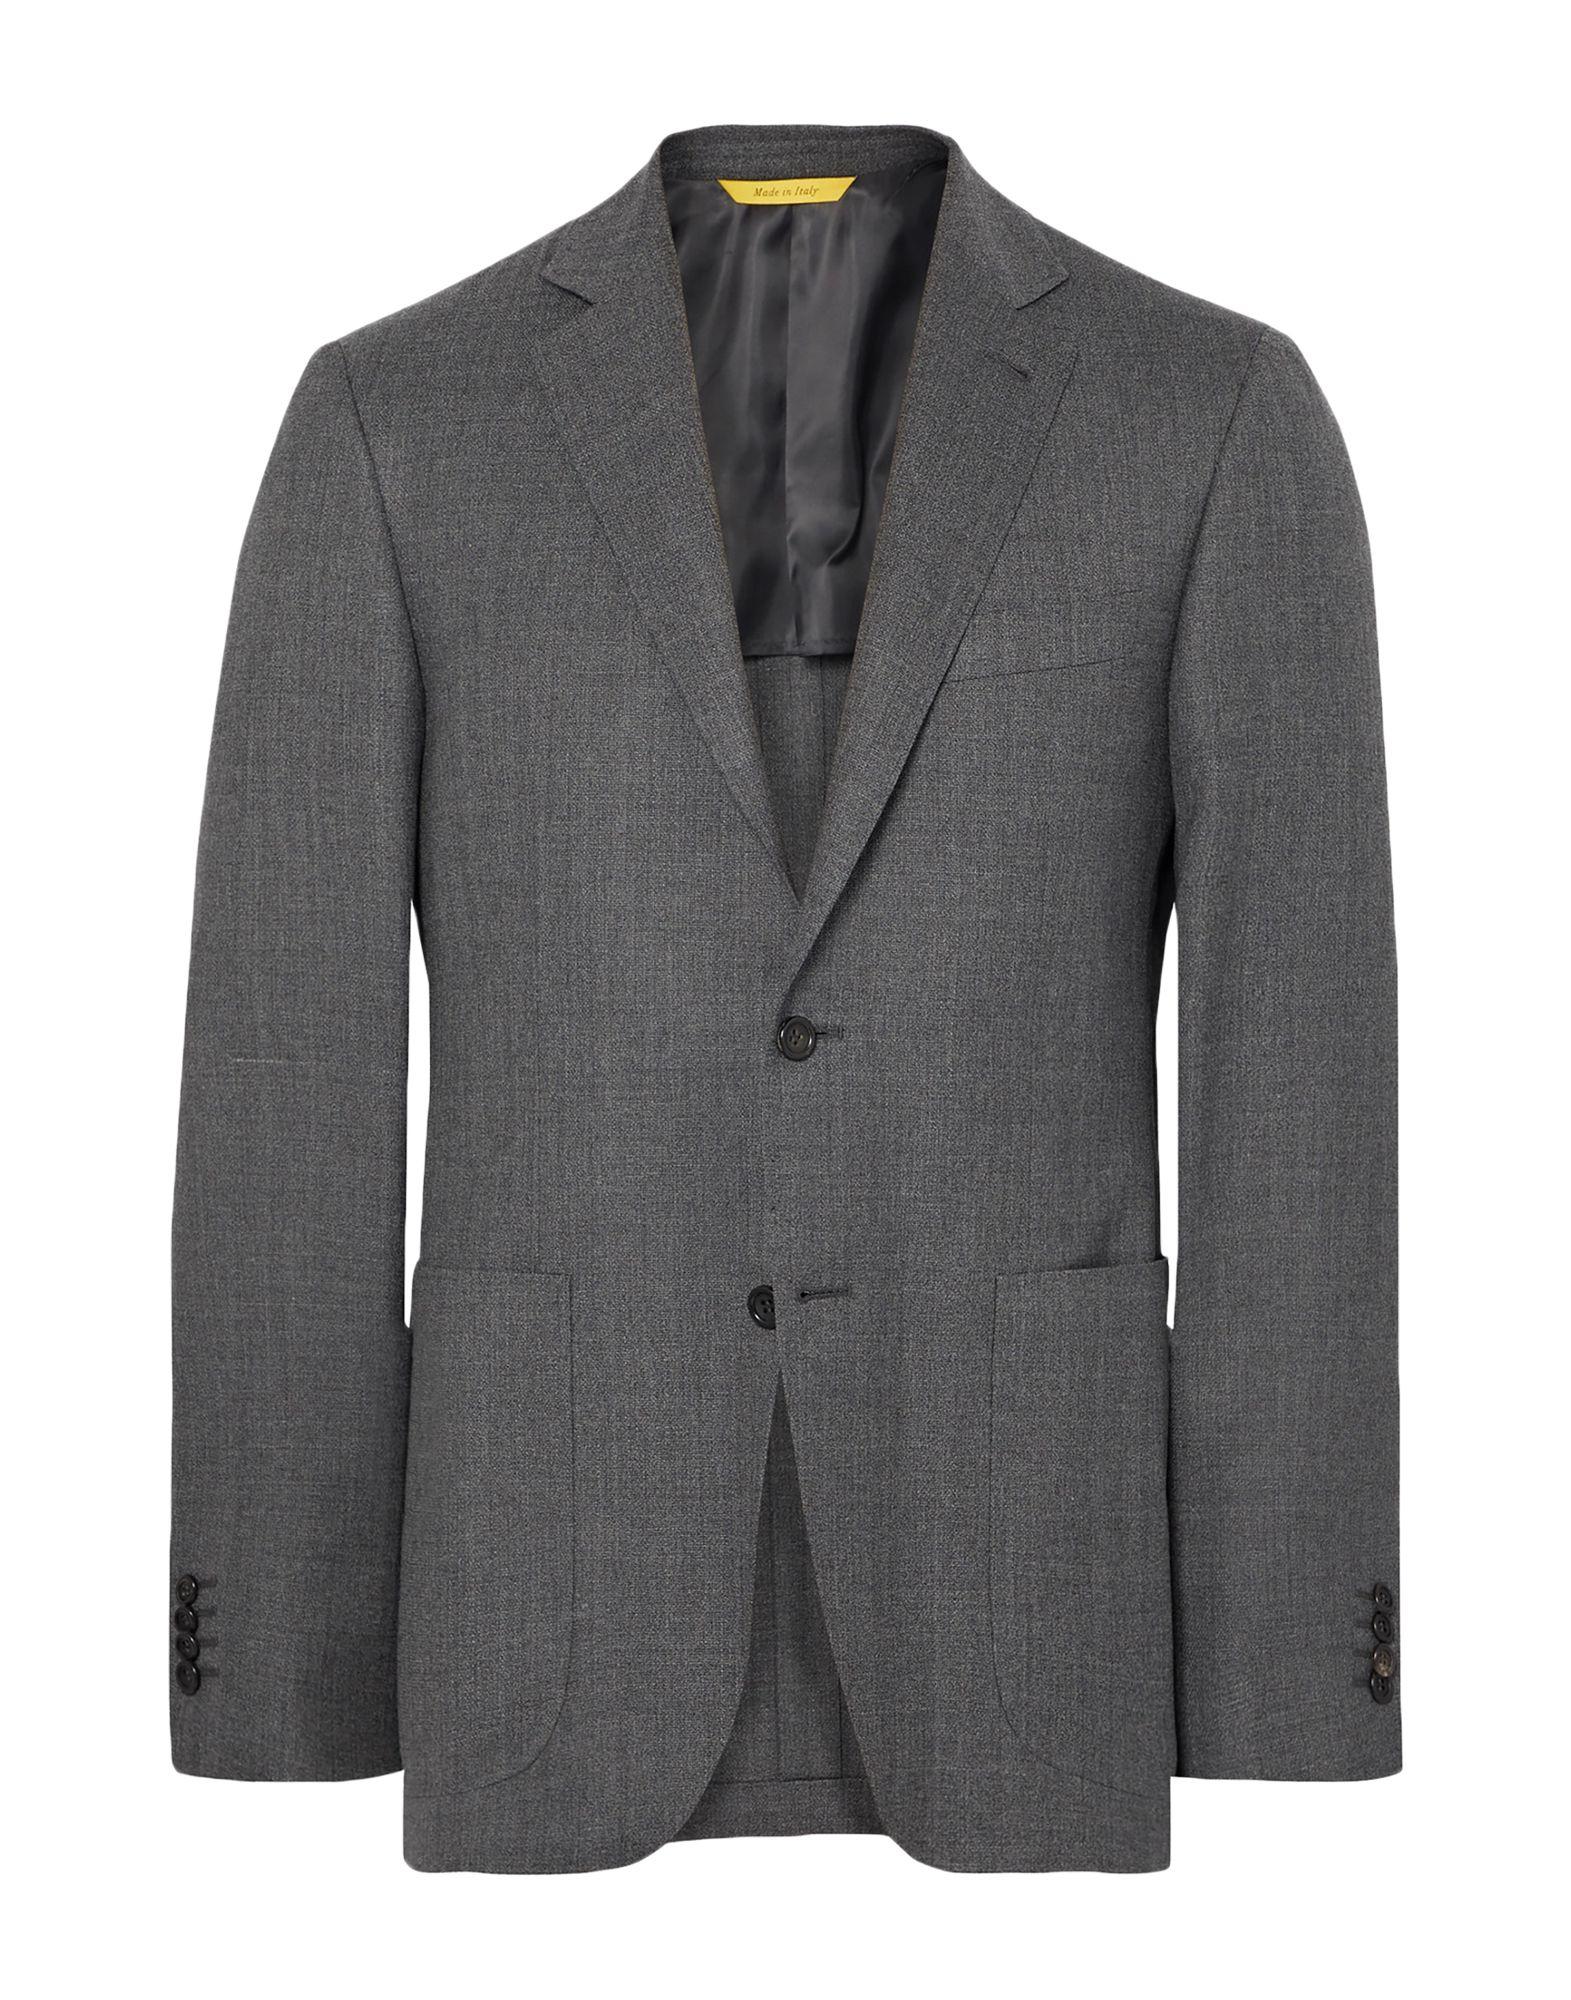 Canali Blazer in Grey (Gray) for Men - Lyst